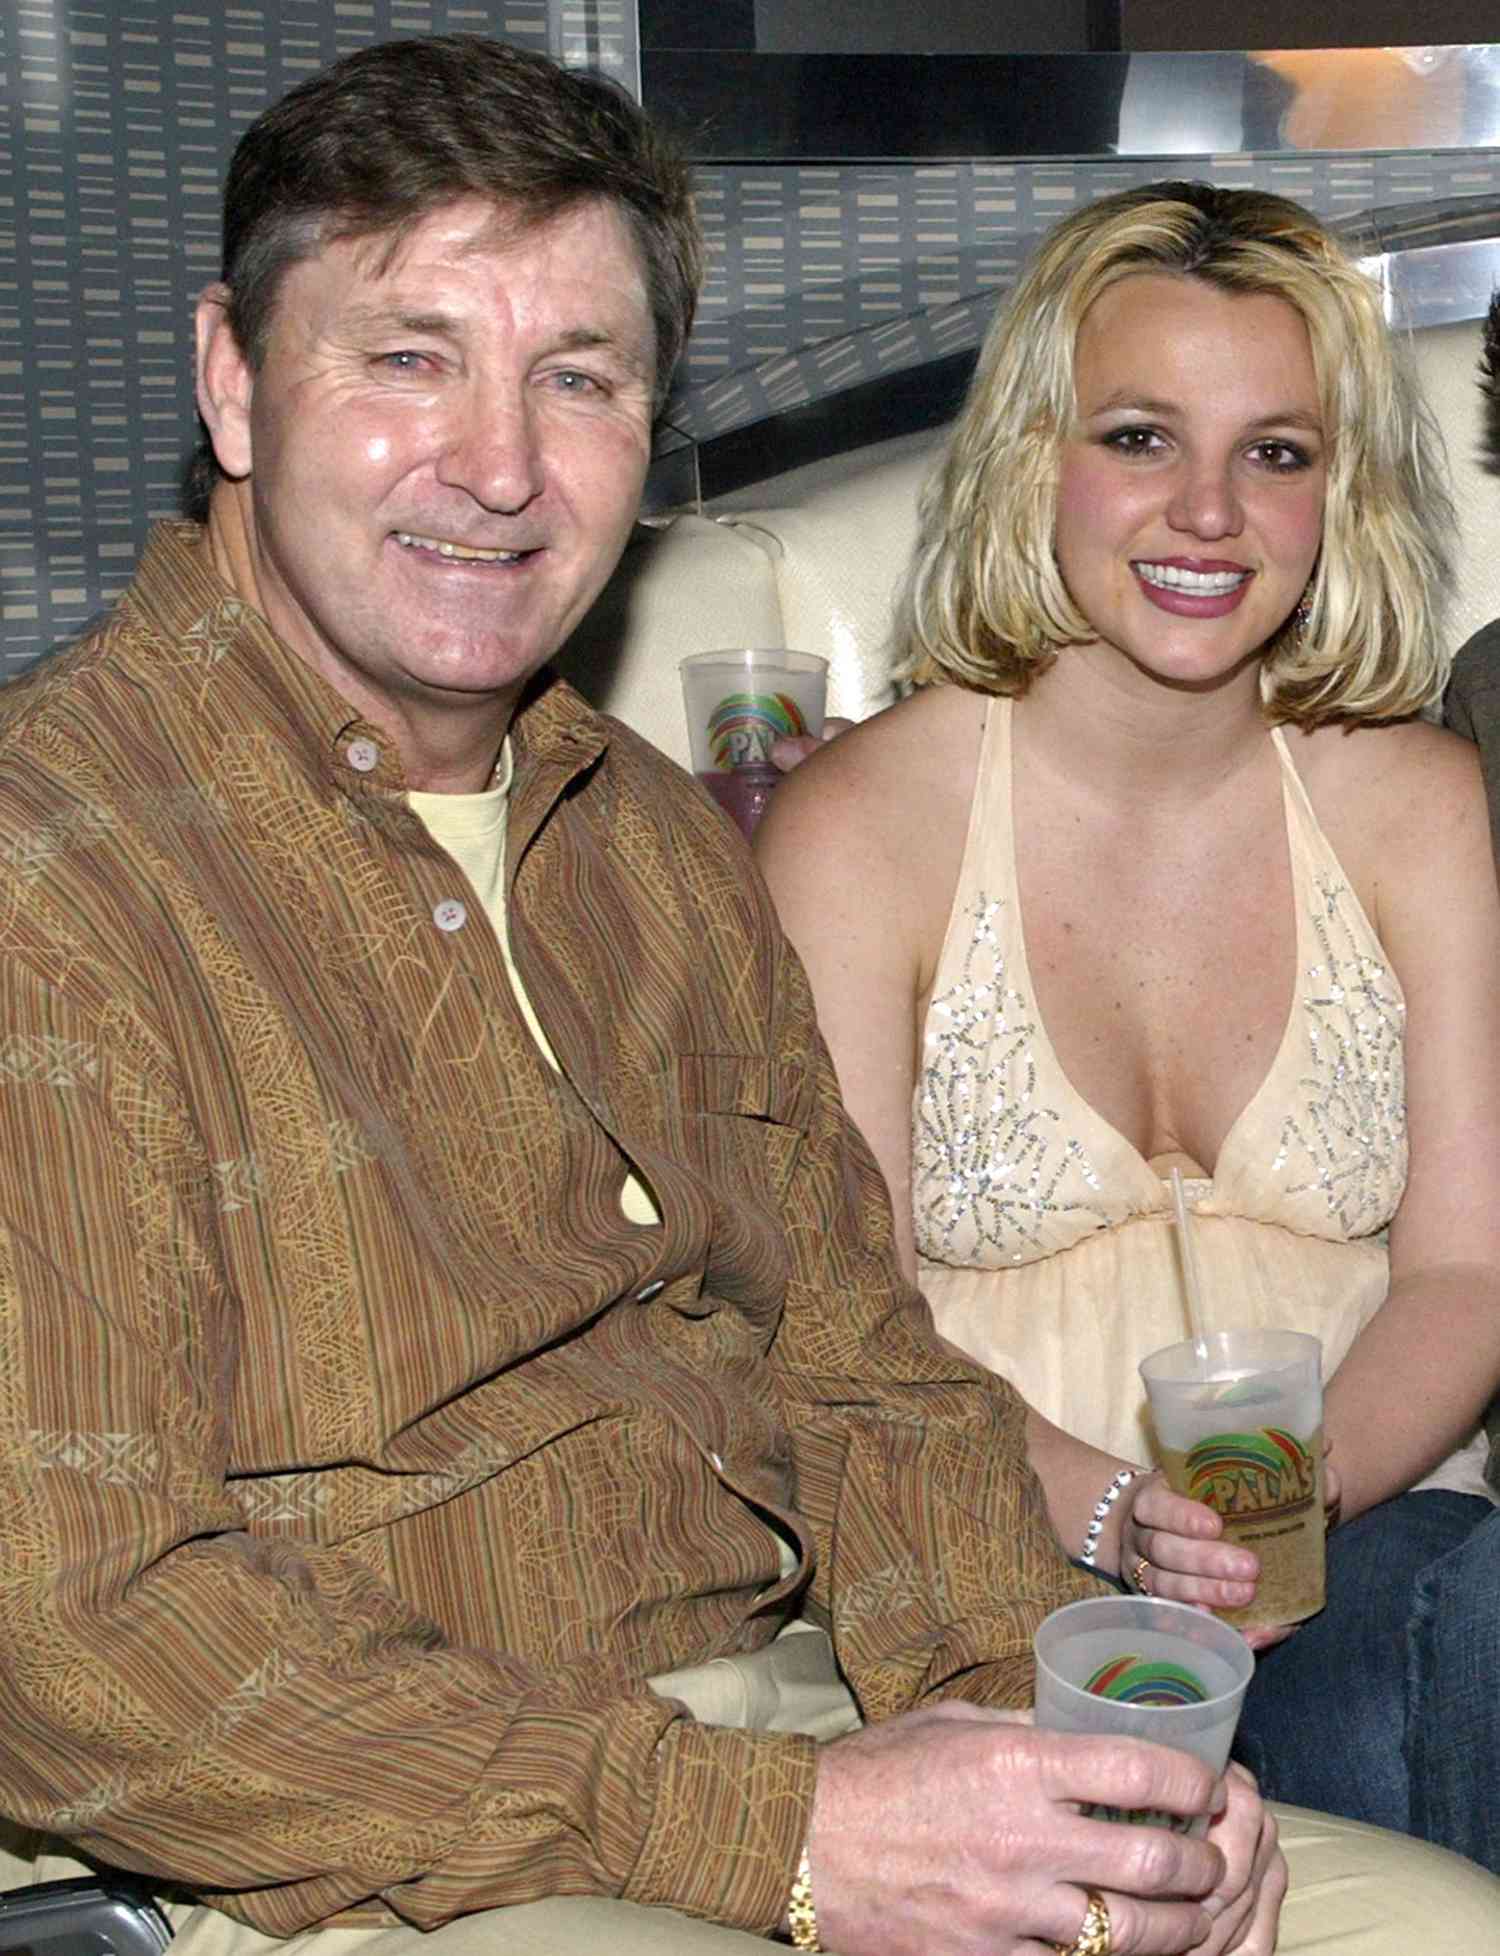 U.S. - Britney Spears at Palms Home Poker Host Launch in Las Vegas